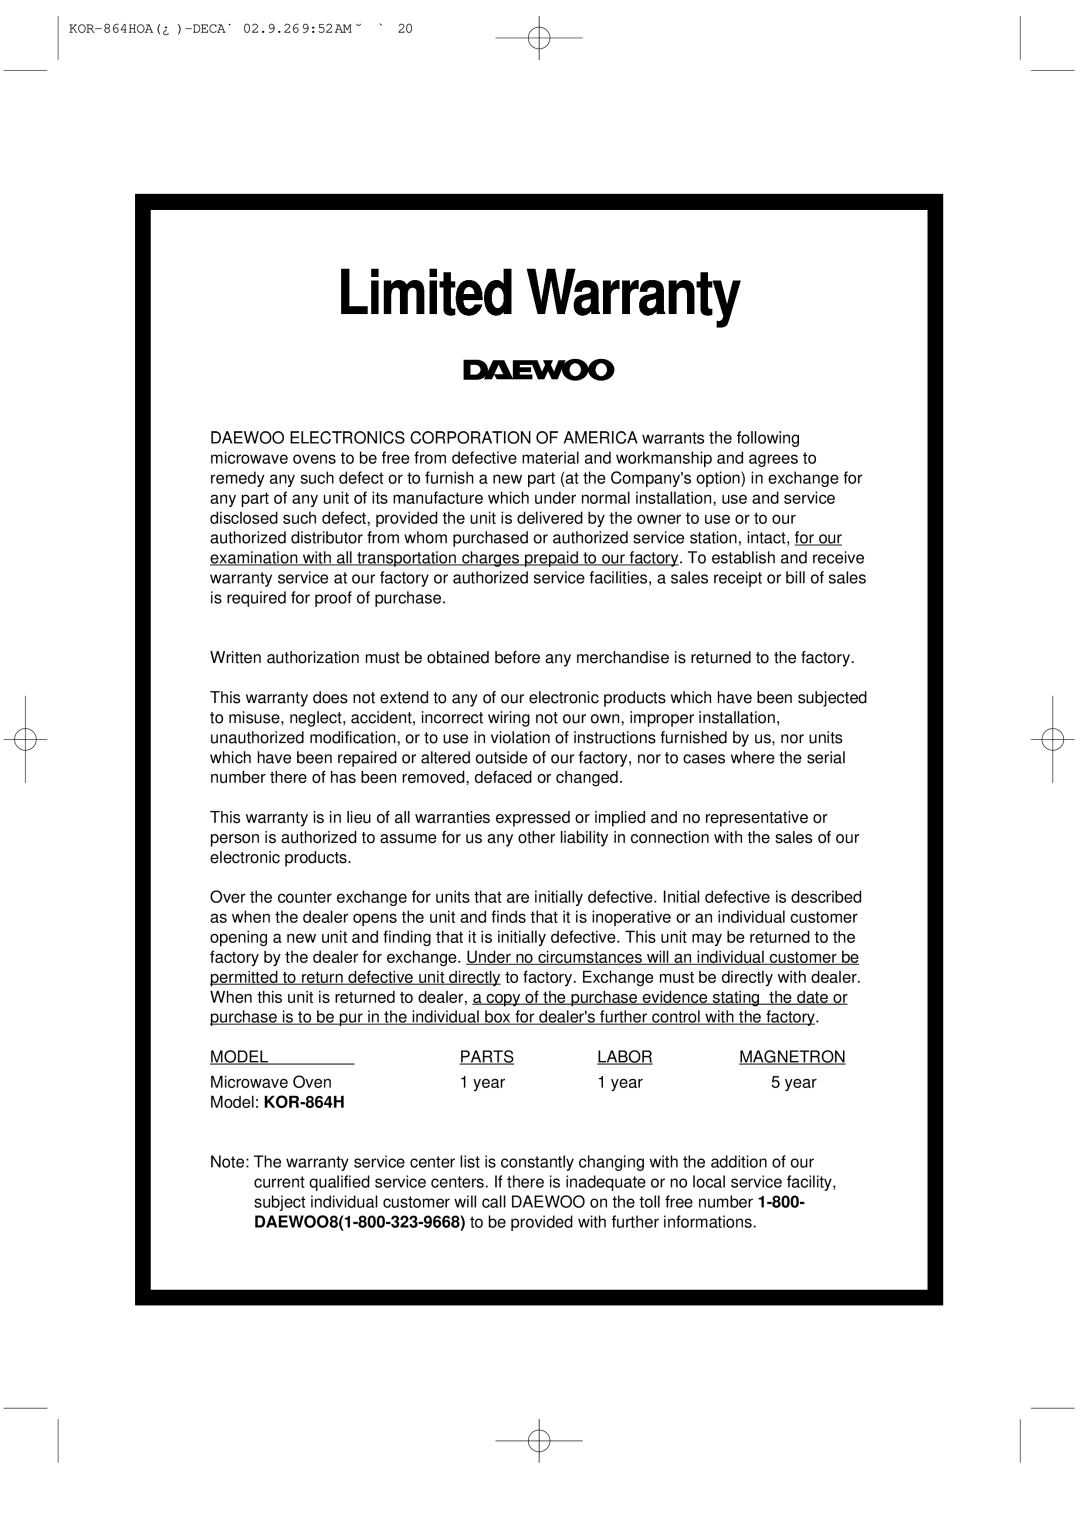 Daewoo operating instructions Limited Warranty, Model KOR-864H 